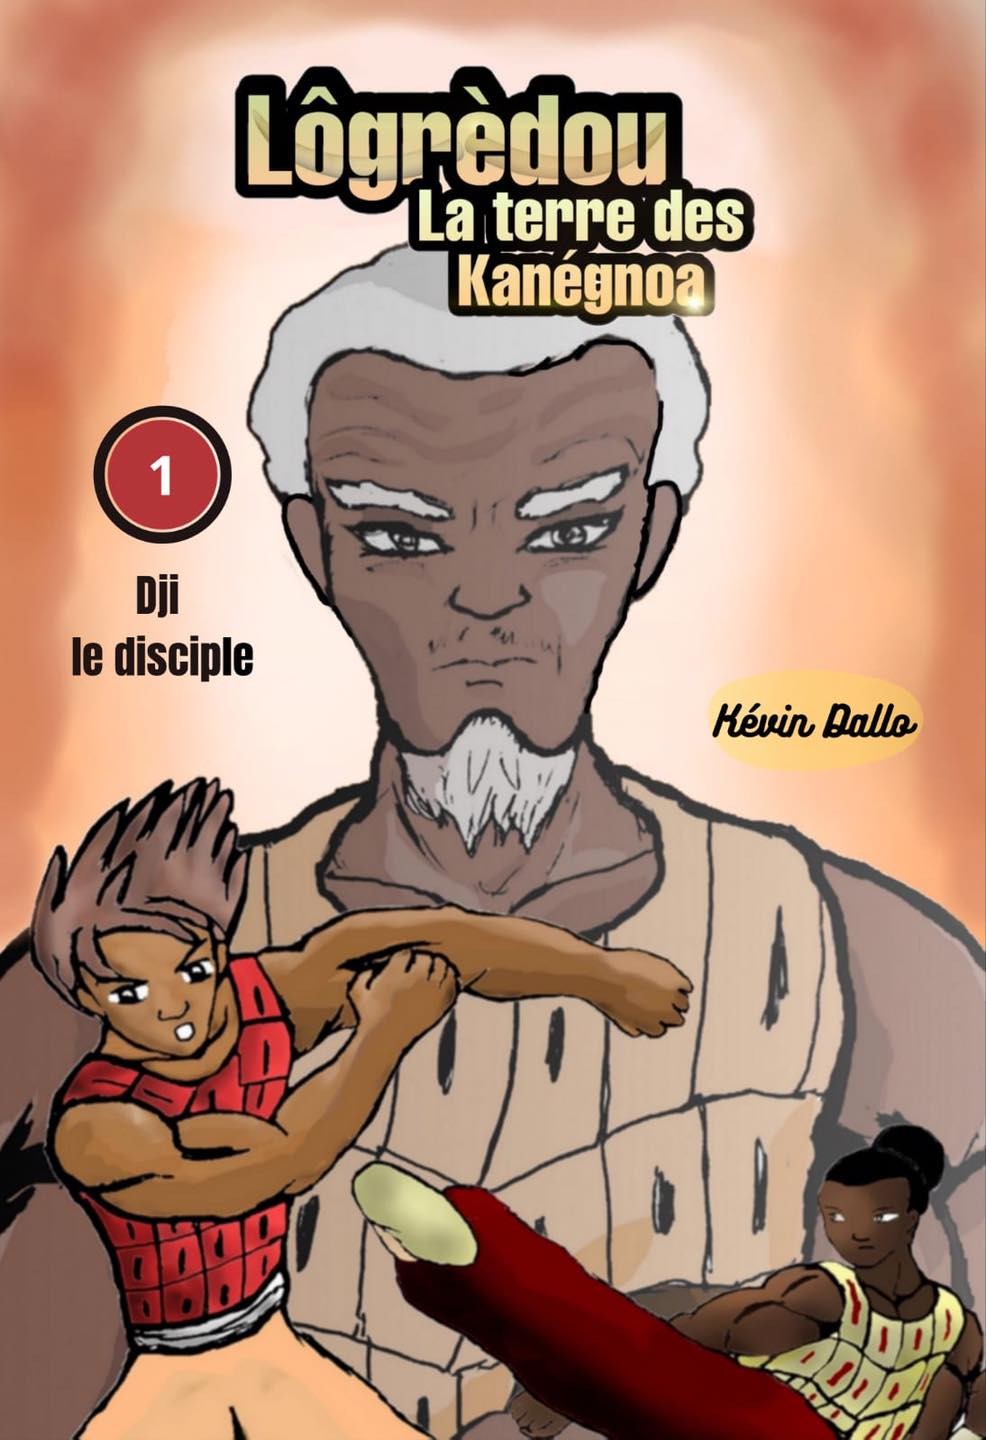 [LITTERATURE] « Lôgrèdou la terre des kanégnoa : Dji le disciple » de Kévin DALLO disponible à la bibliothèque Mwana Afrobook